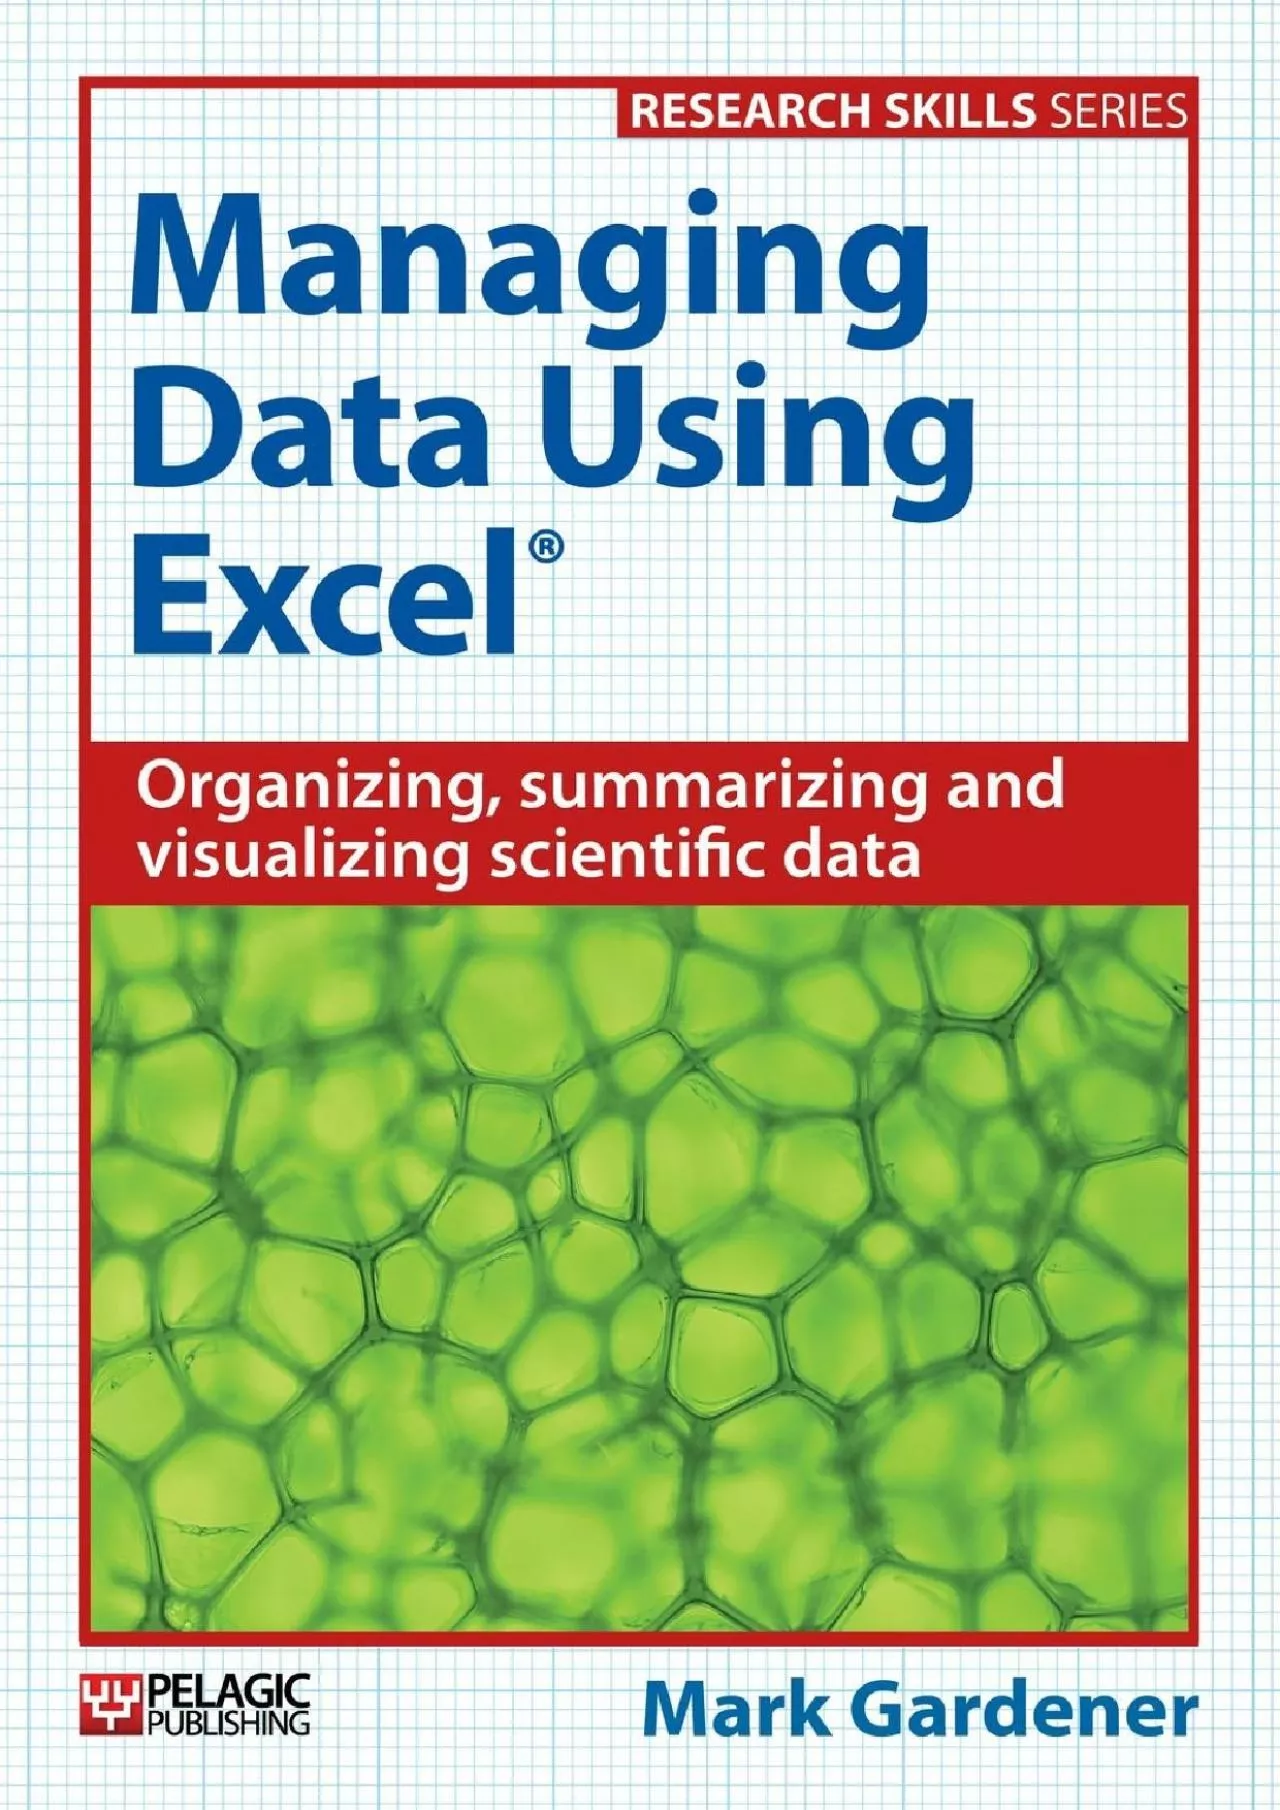 (DOWNLOAD)-Managing Data Using Excel: Organizing, Summarizing and Visualizing Scientific